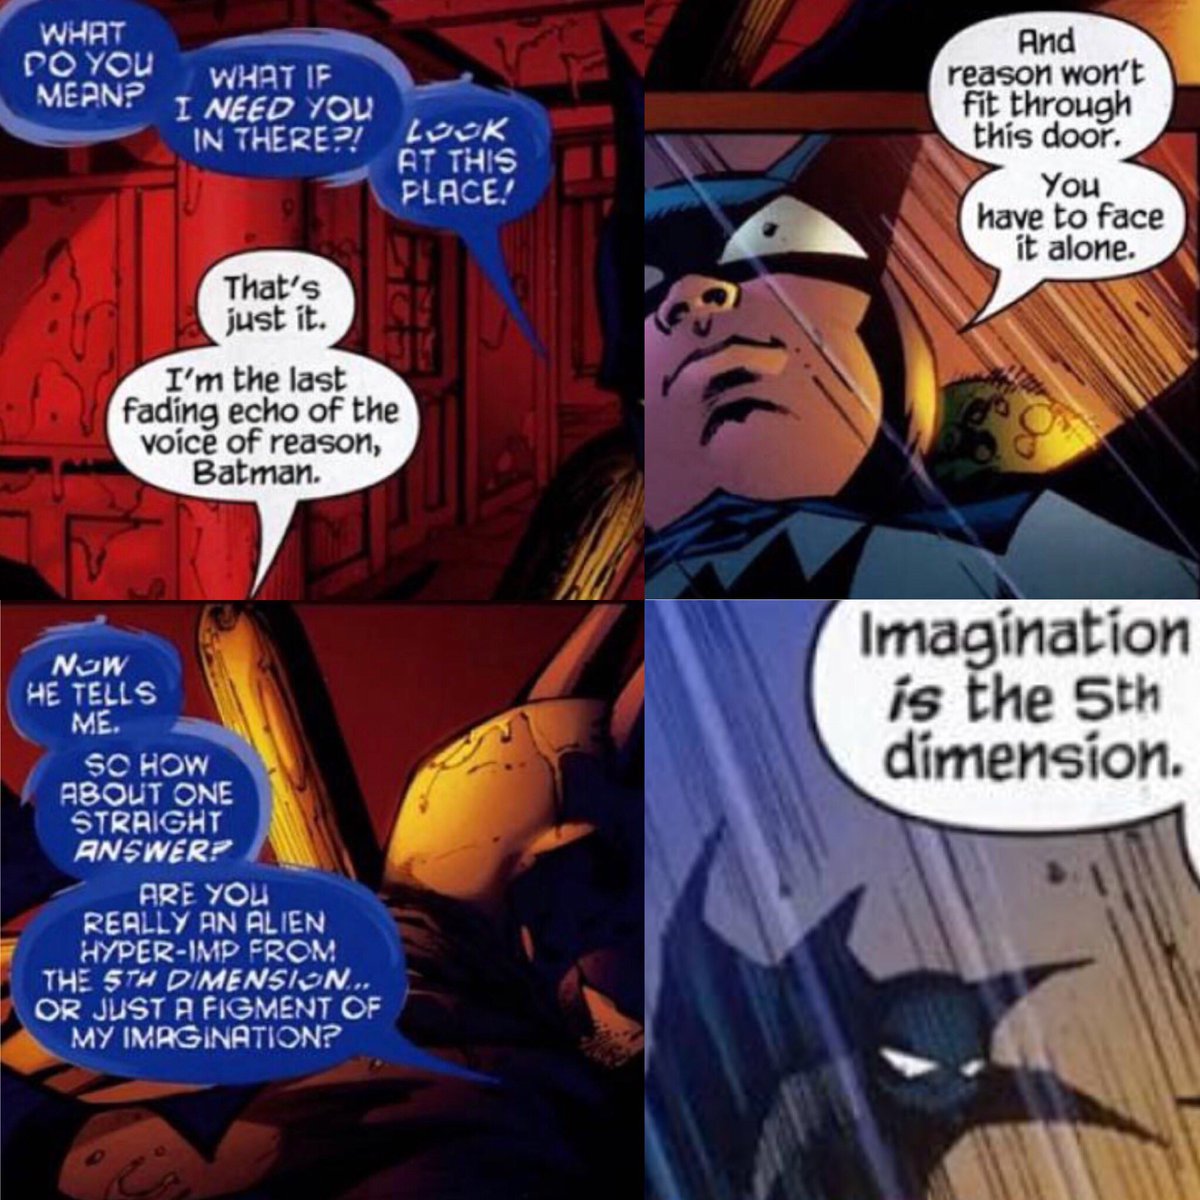 “Imagination IS the 5th Dimension.” - BatMite, via @grantmorrison https://t.co/KOqoI32mBe